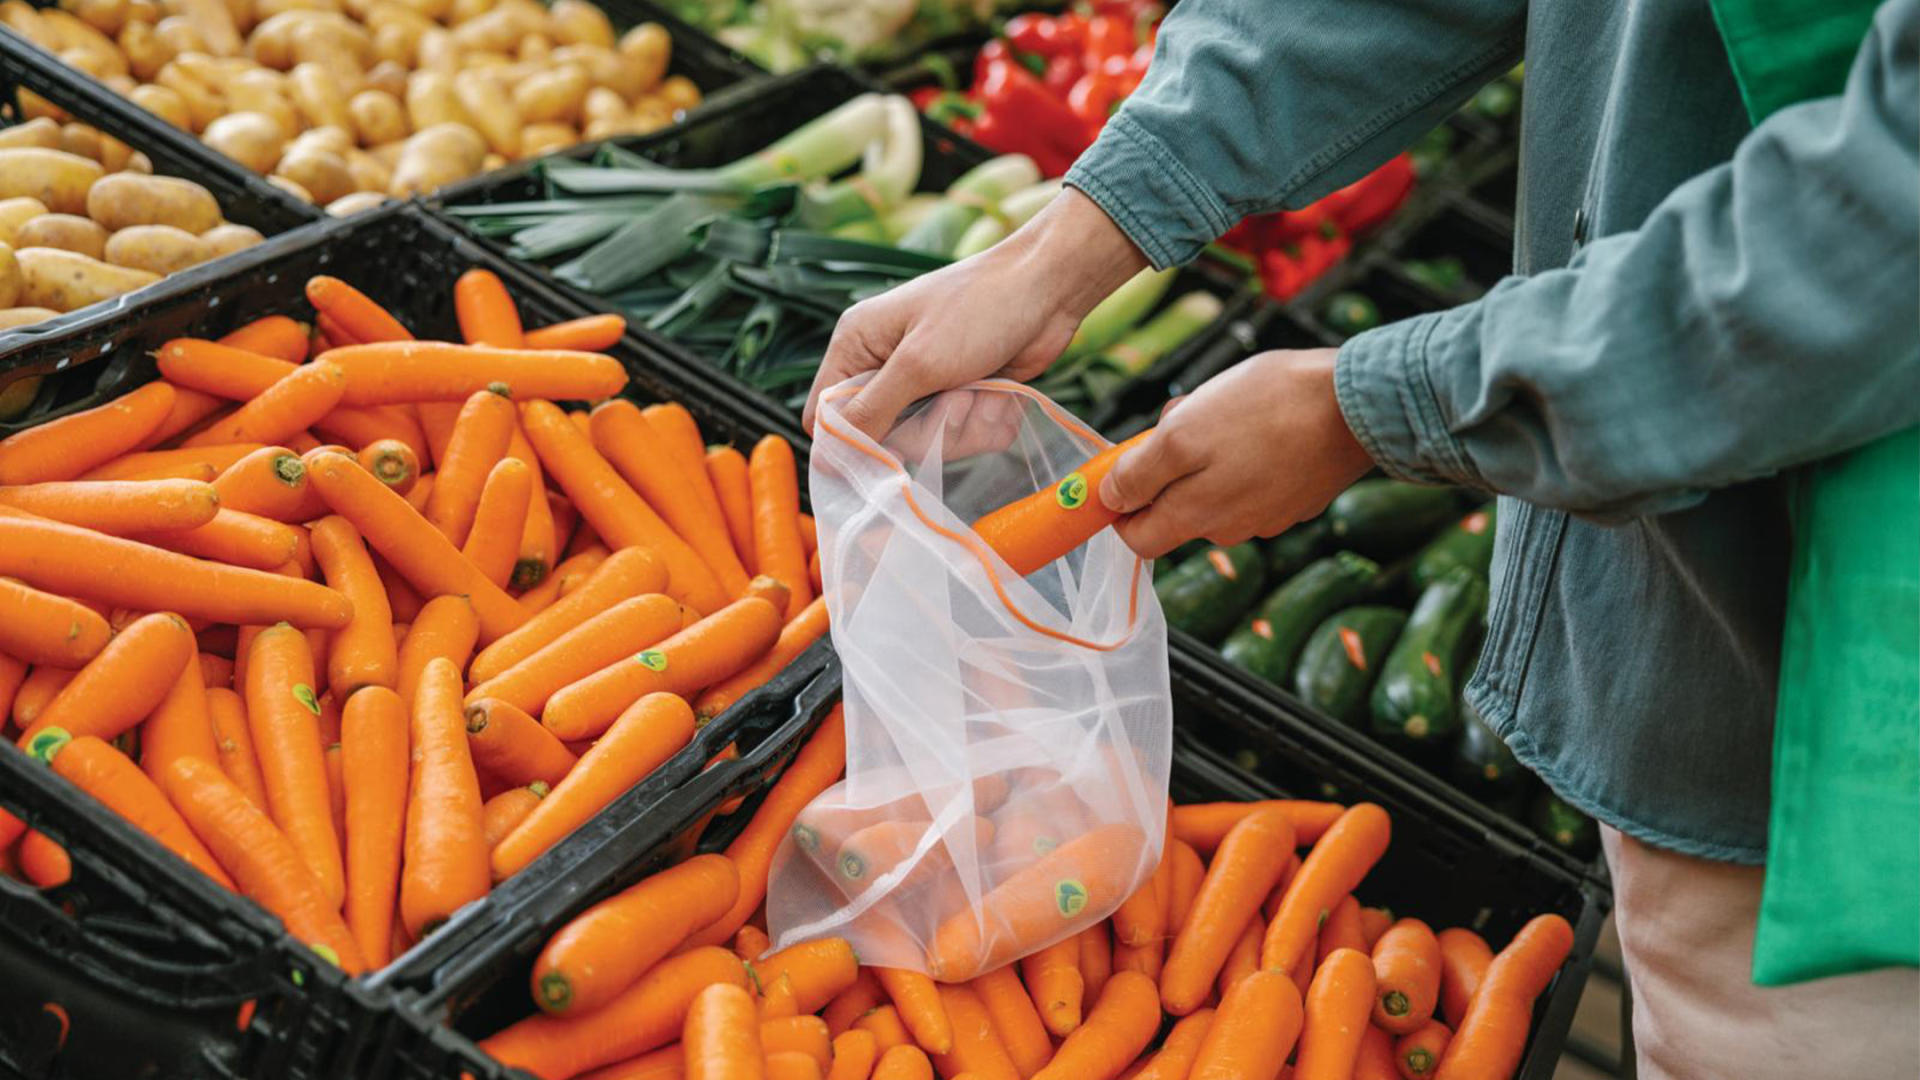 A man packs carrots into a veggie bag